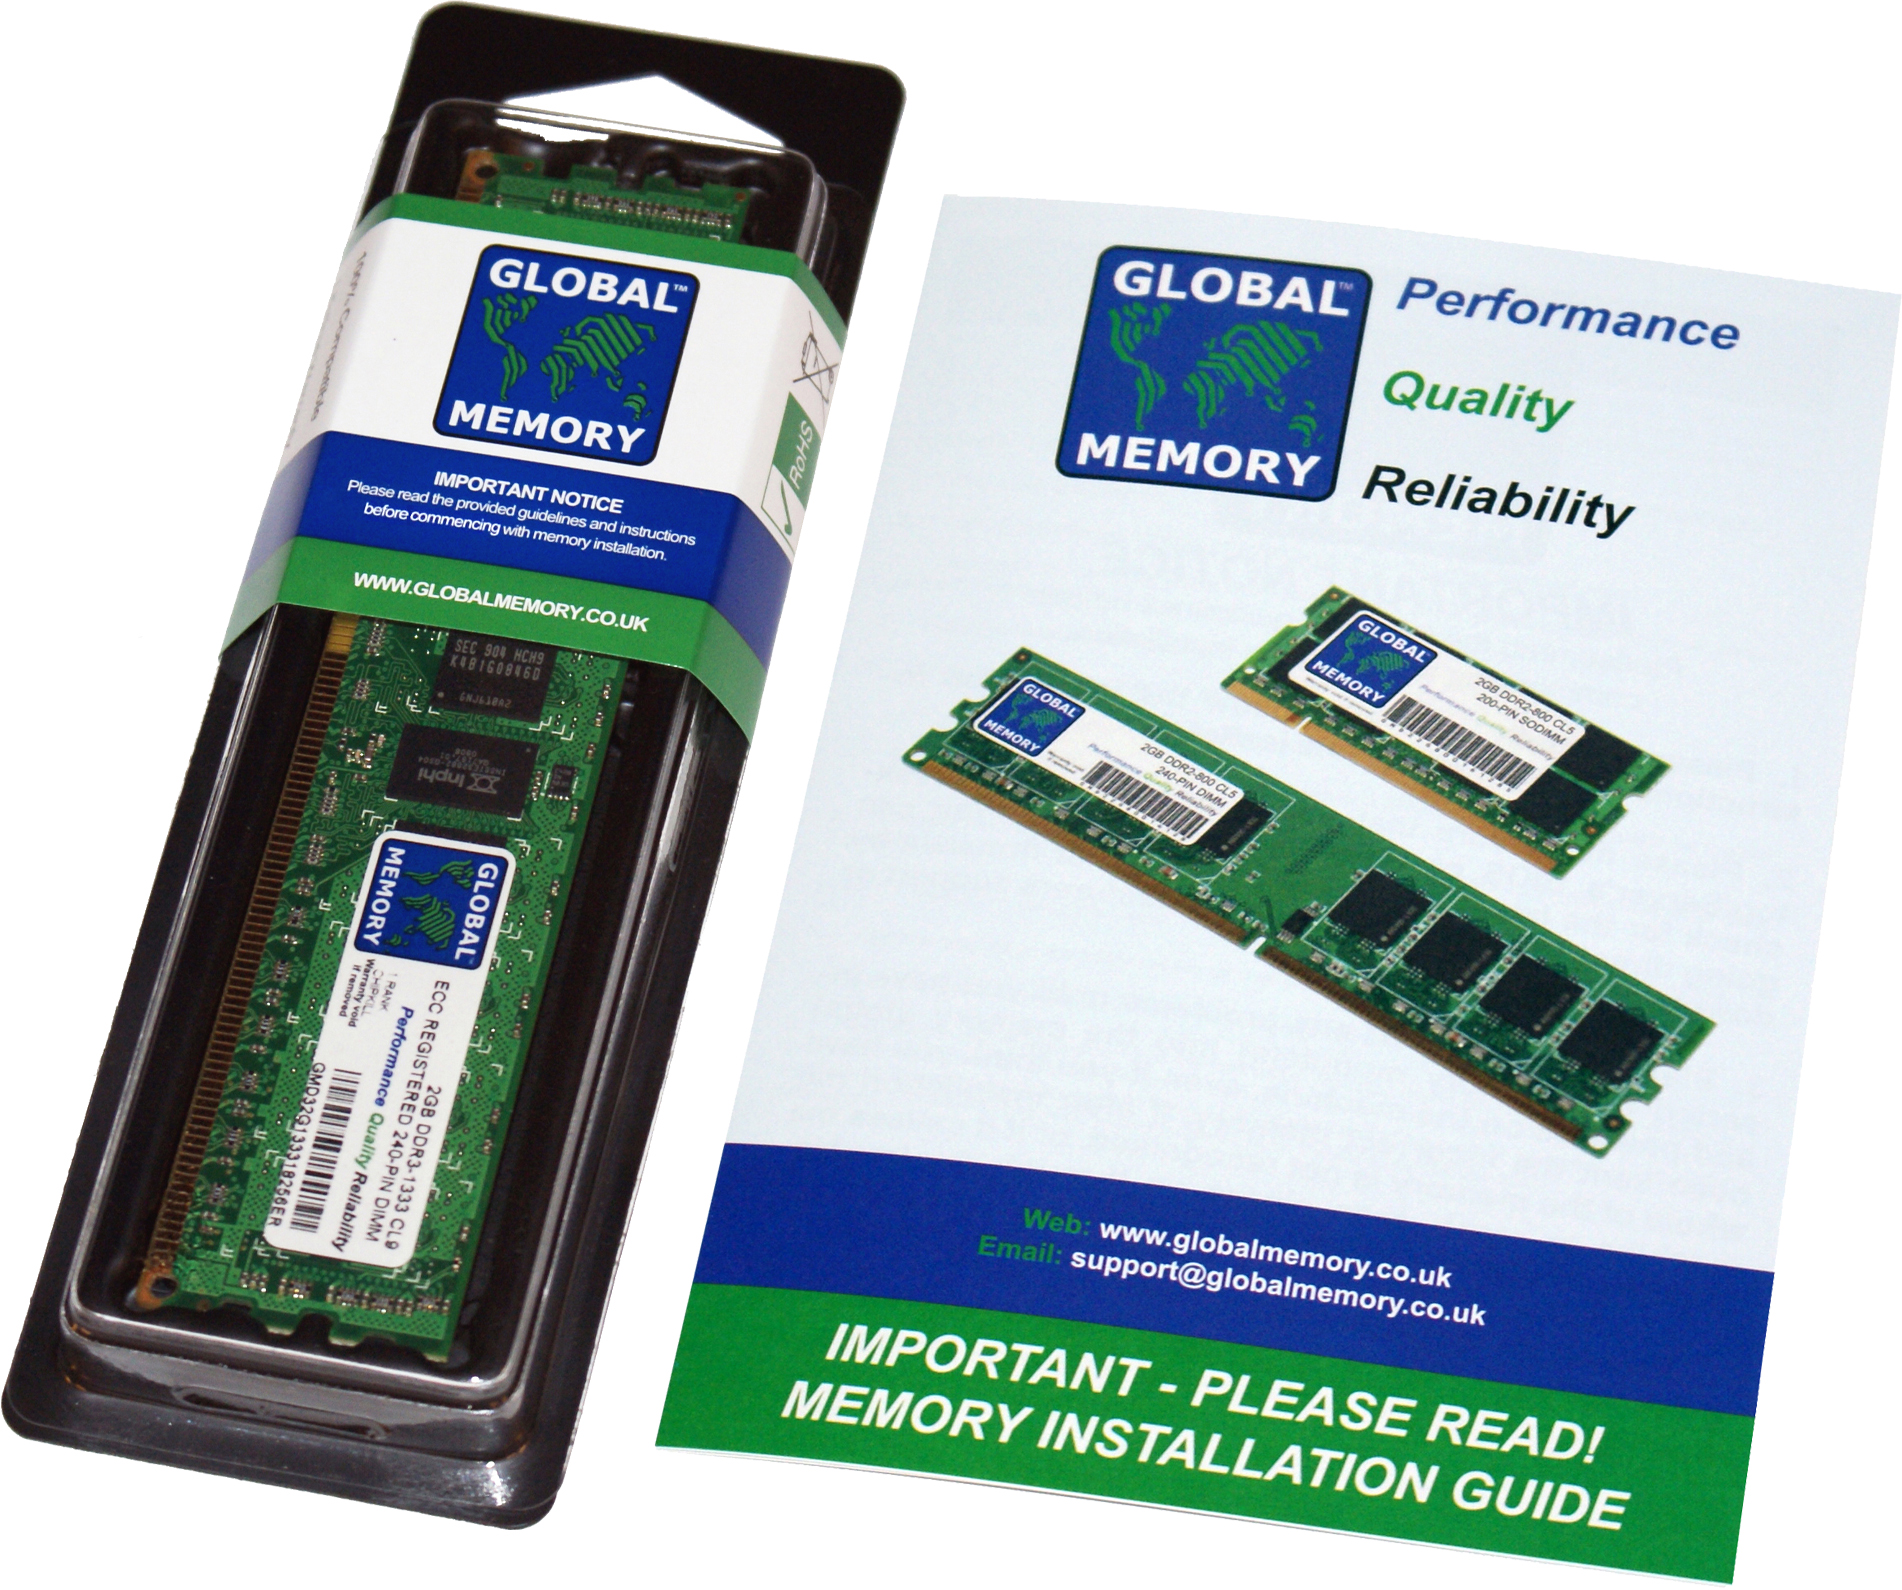 8GB DDR4 2933MHz PC4-23400 288-PIN ECC REGISTERED DIMM (RDIMM) MEMORY RAM FOR FUJITSU SERVERS/WORKSTATIONS (1 RANK CHIPKILL)